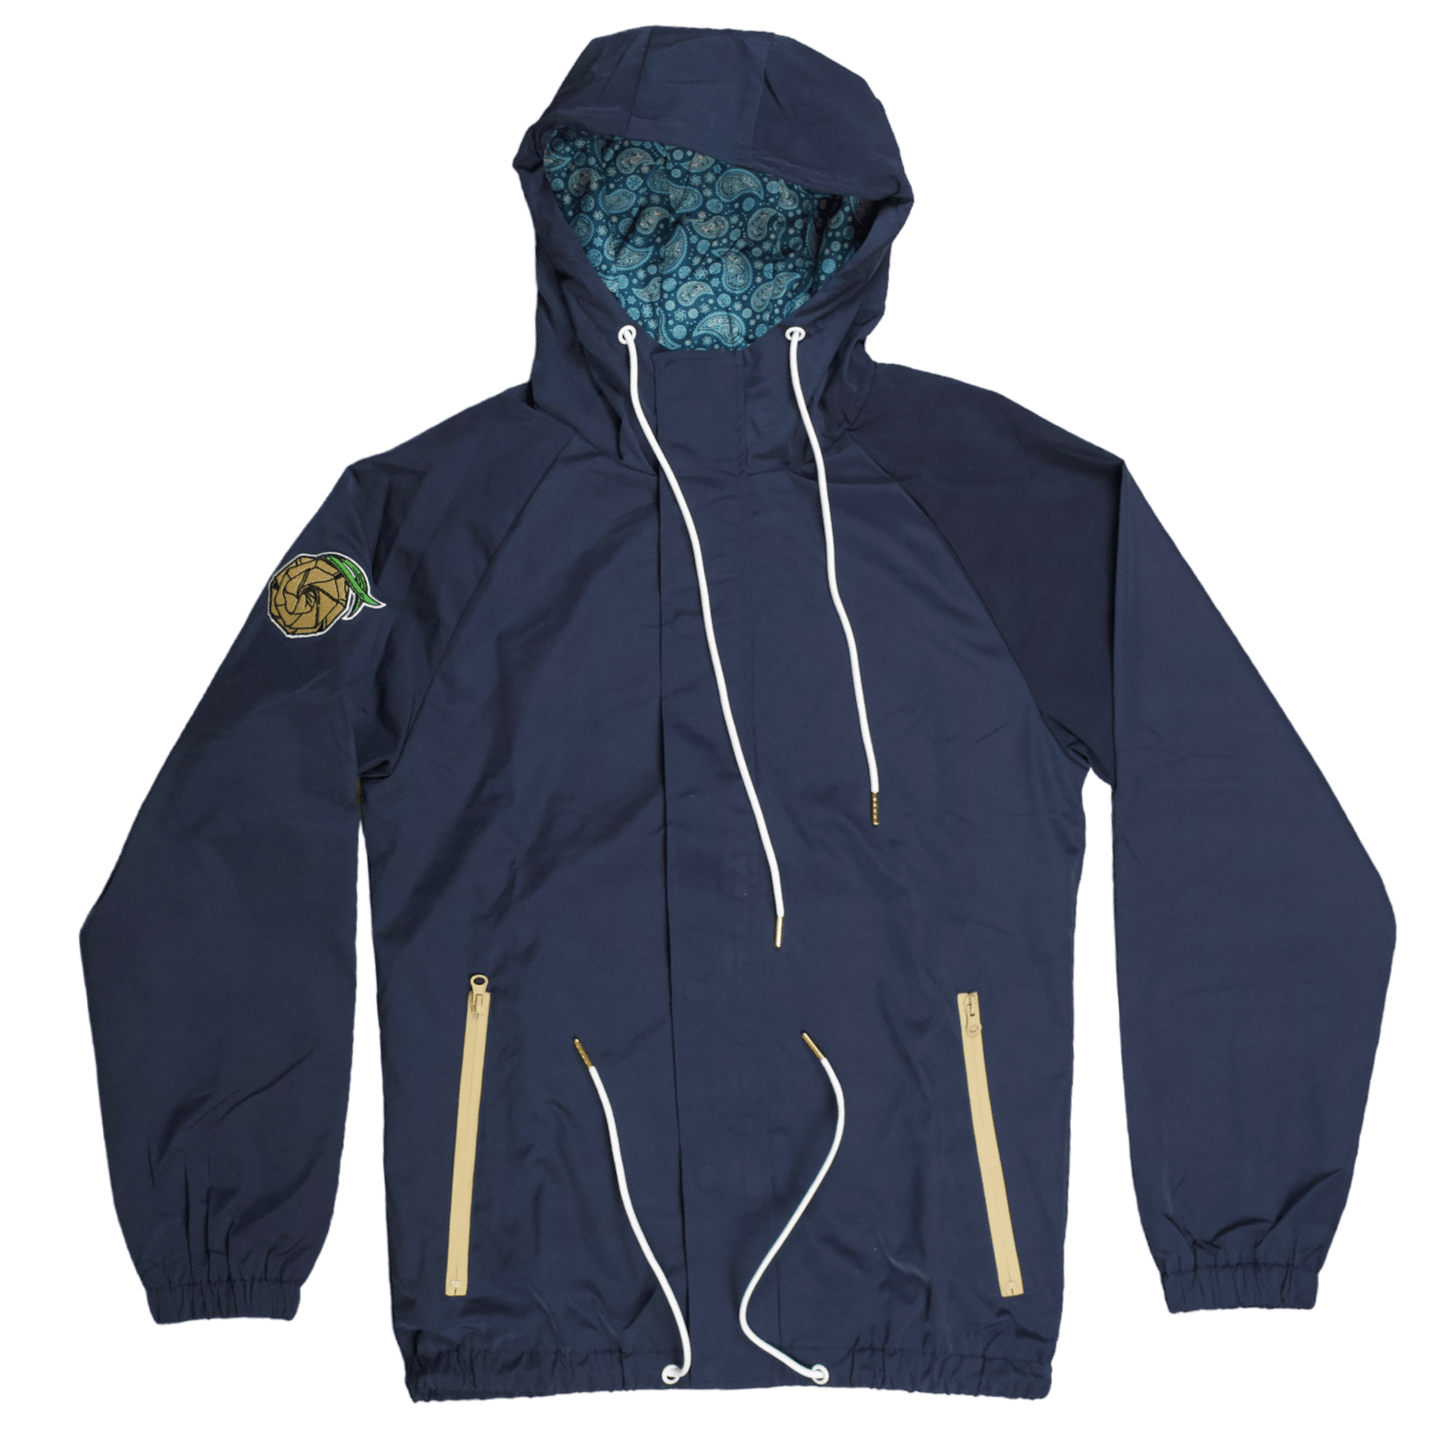 ɡēchē jacket - SweetGrass Clothing Company